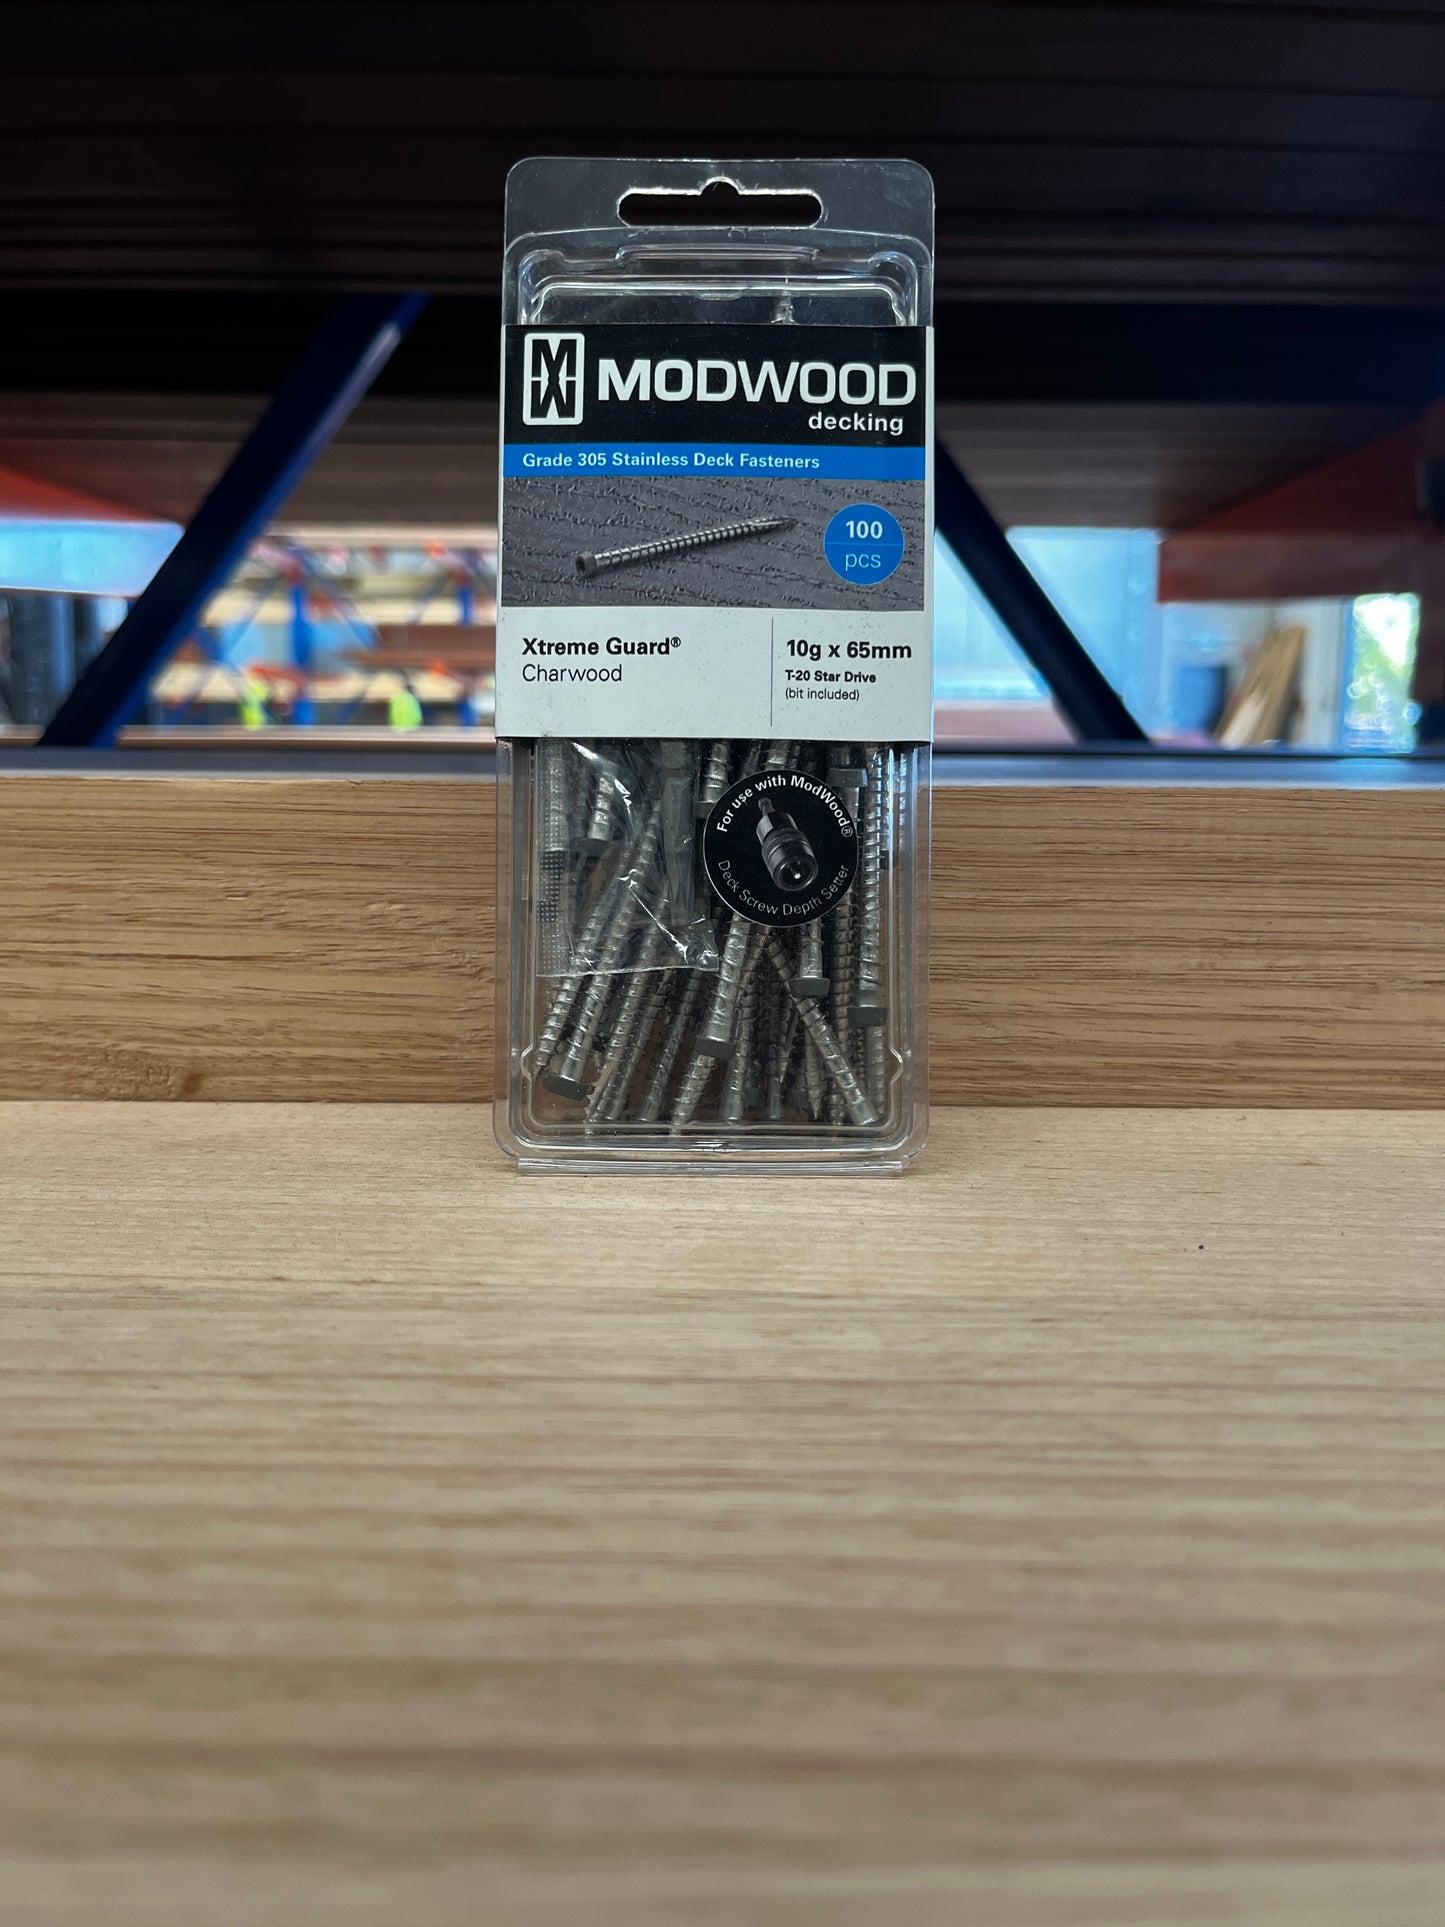 Modwood Decking Screws 10g x 65mm (Charwood)